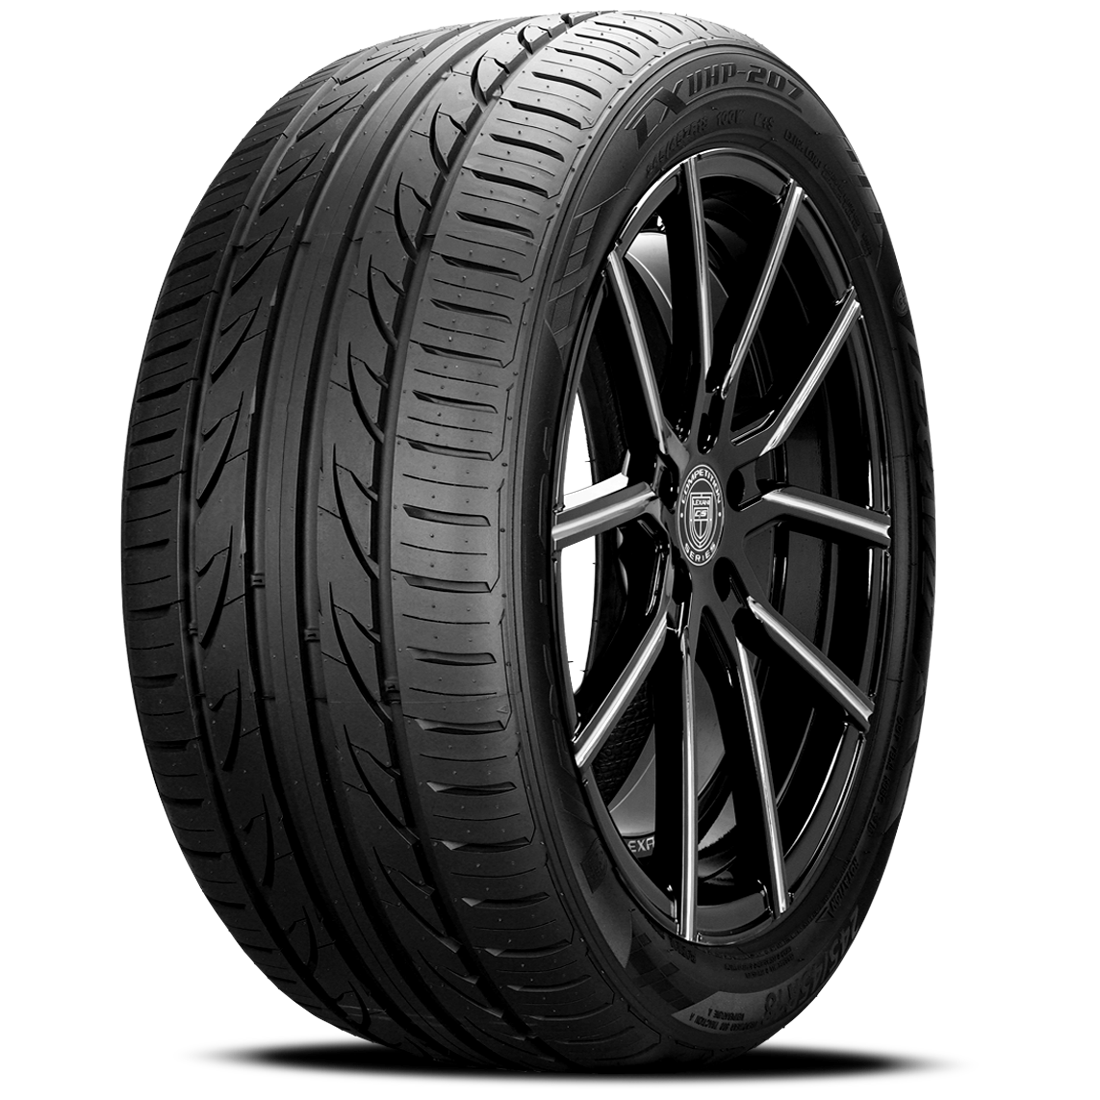 LEXANI LXUHP-207 215/45ZR17 (24.6X8.5R 17) Tires